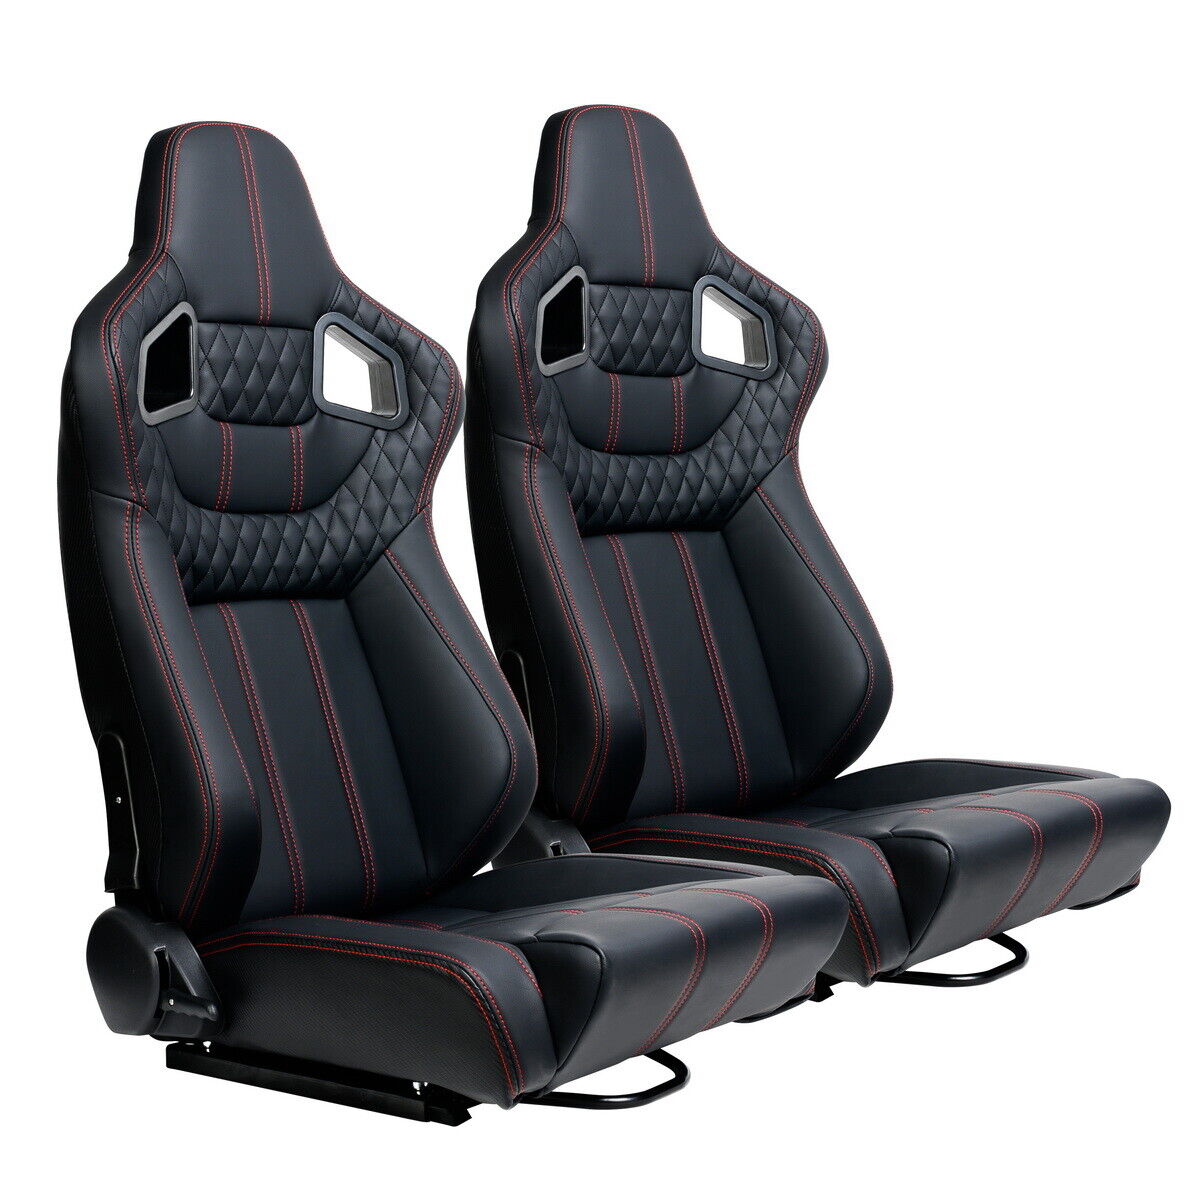 2PCS Universal Car Racing Seats PU Leather Reclinable Bucket Seats Black & Red 